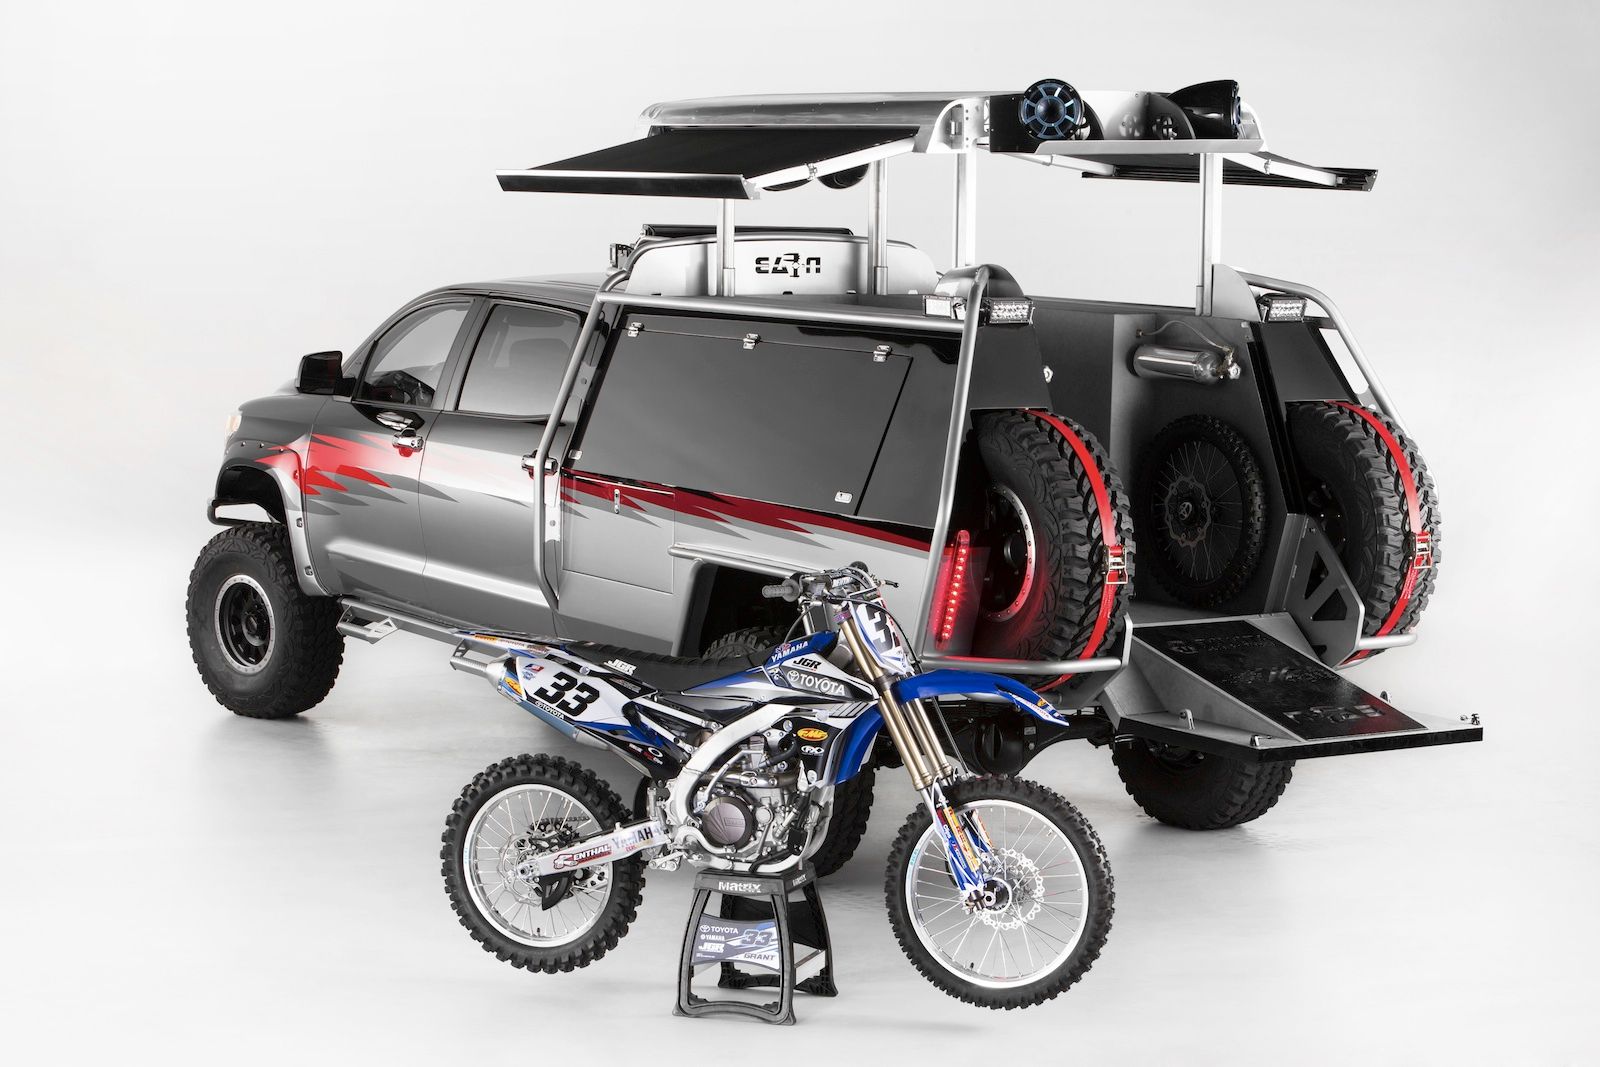 2014 Toyota Dream Build Challenge Let’s Go Moto Tundra